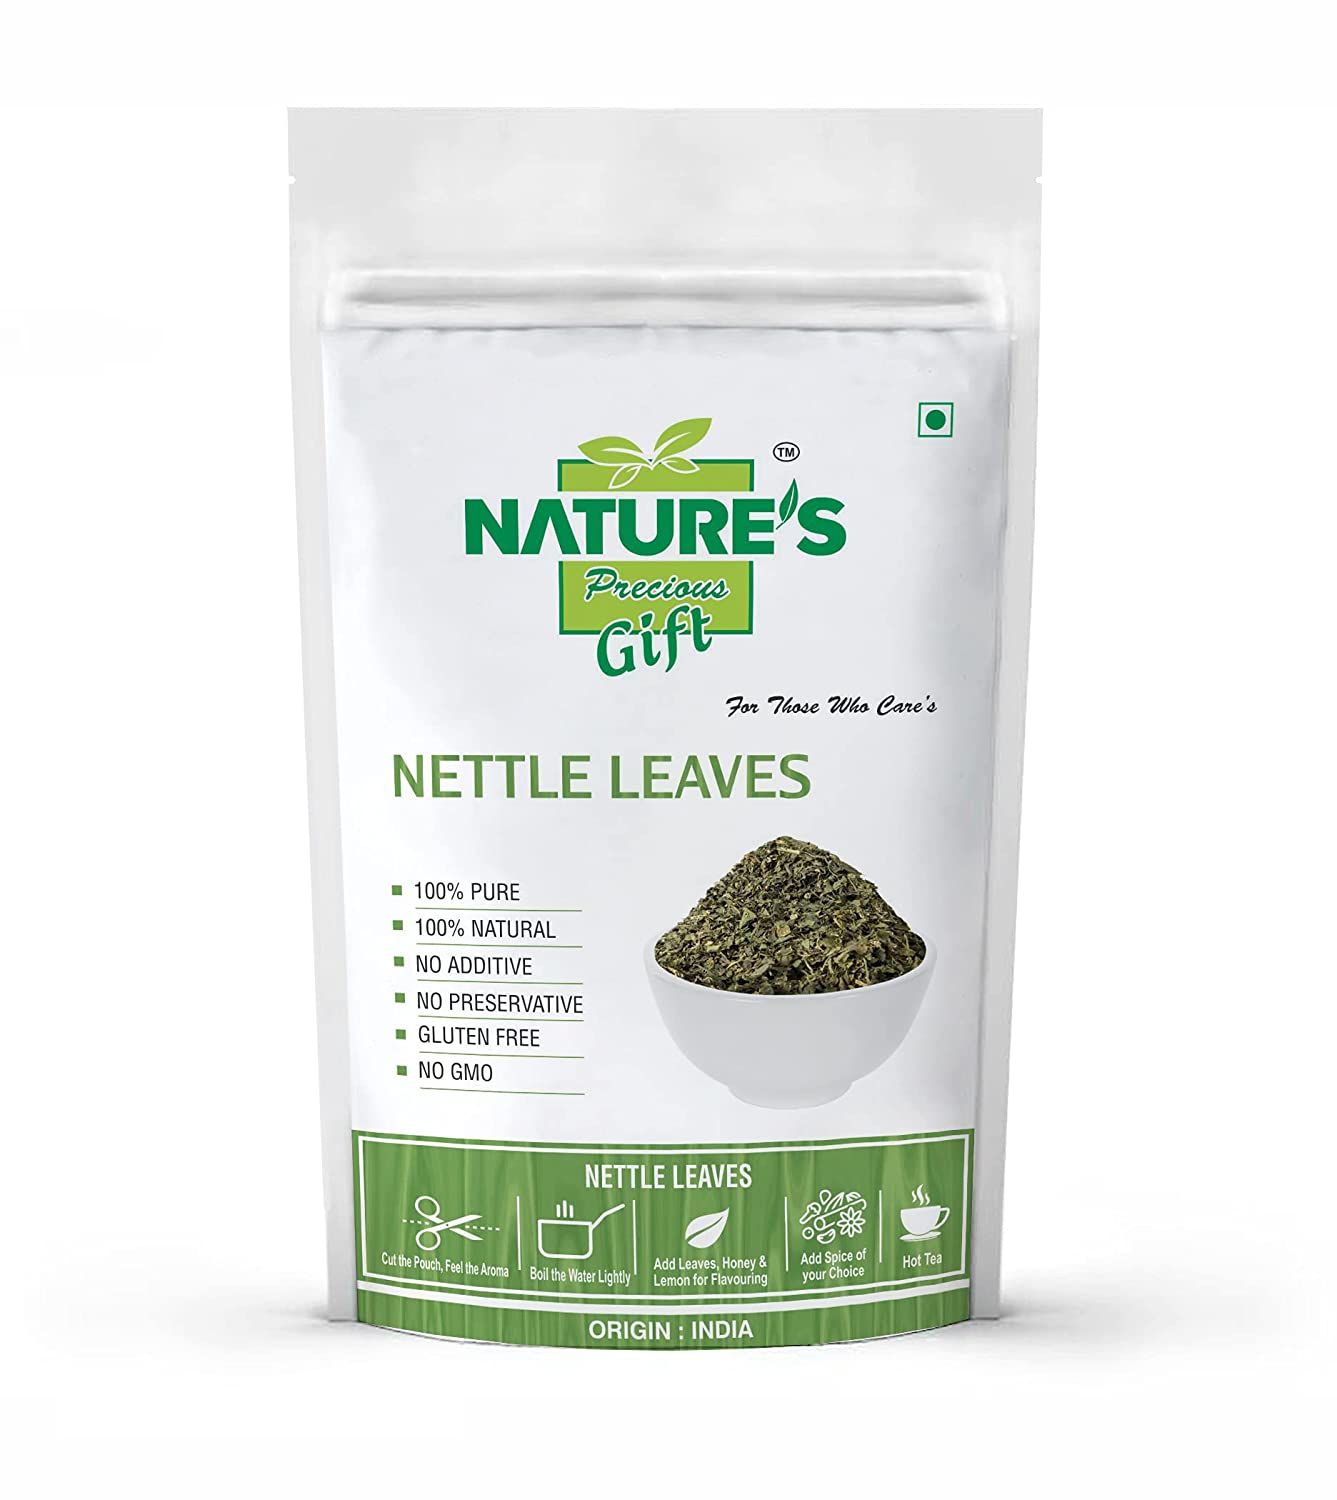 Nature's Gift Nettle Leaves Image